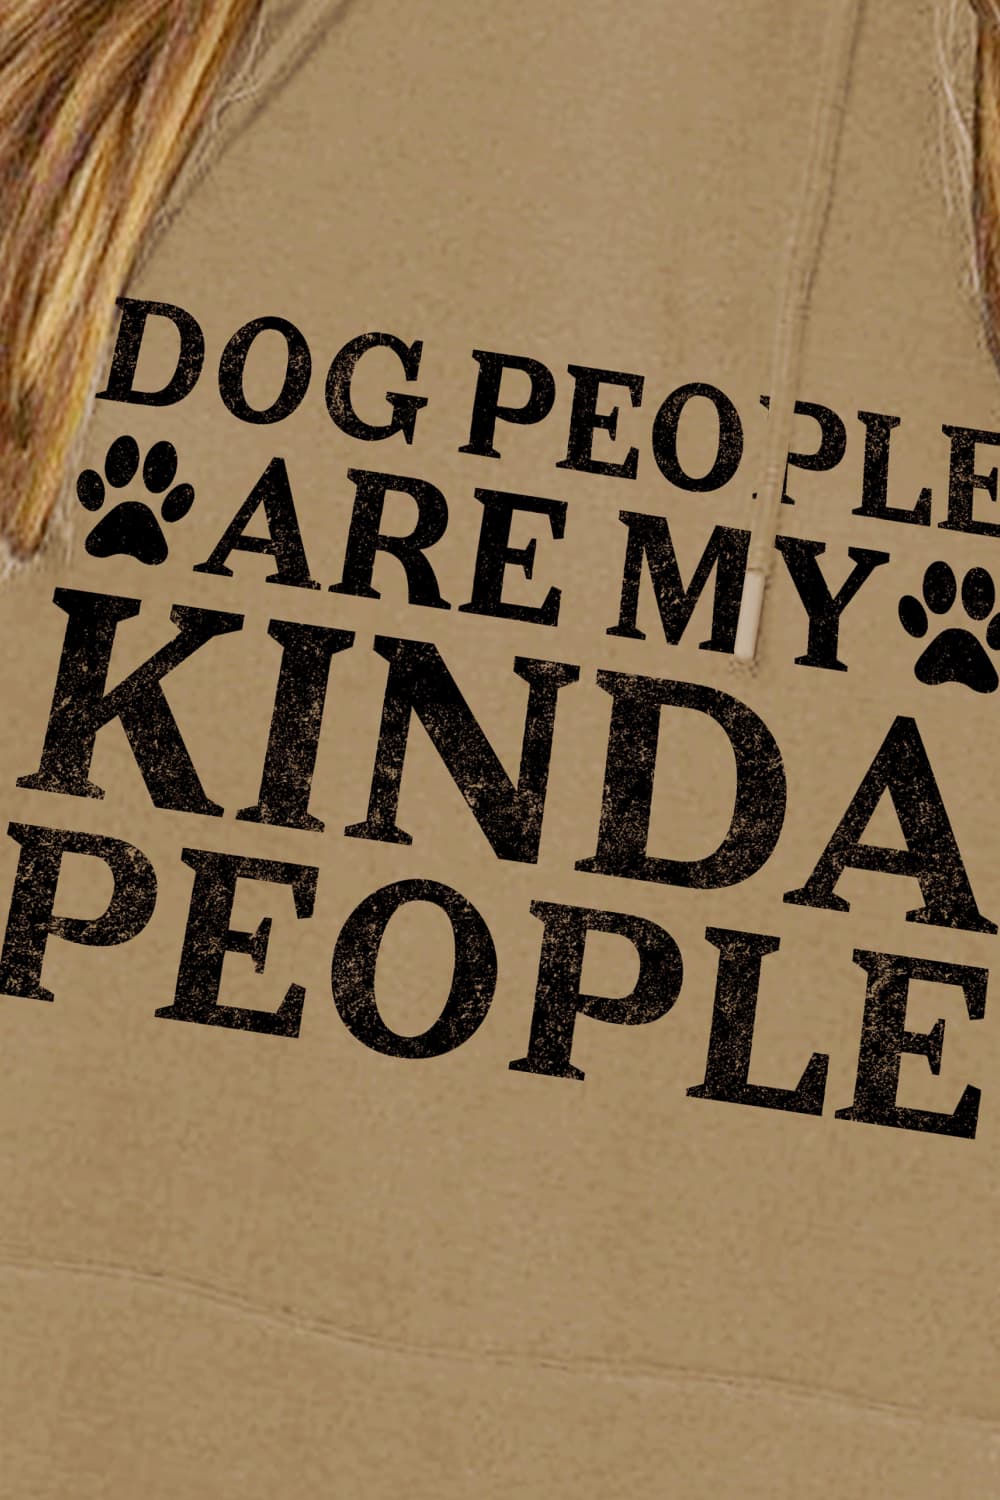 Full Size Dog Paw Slogan Graphic Hoodie